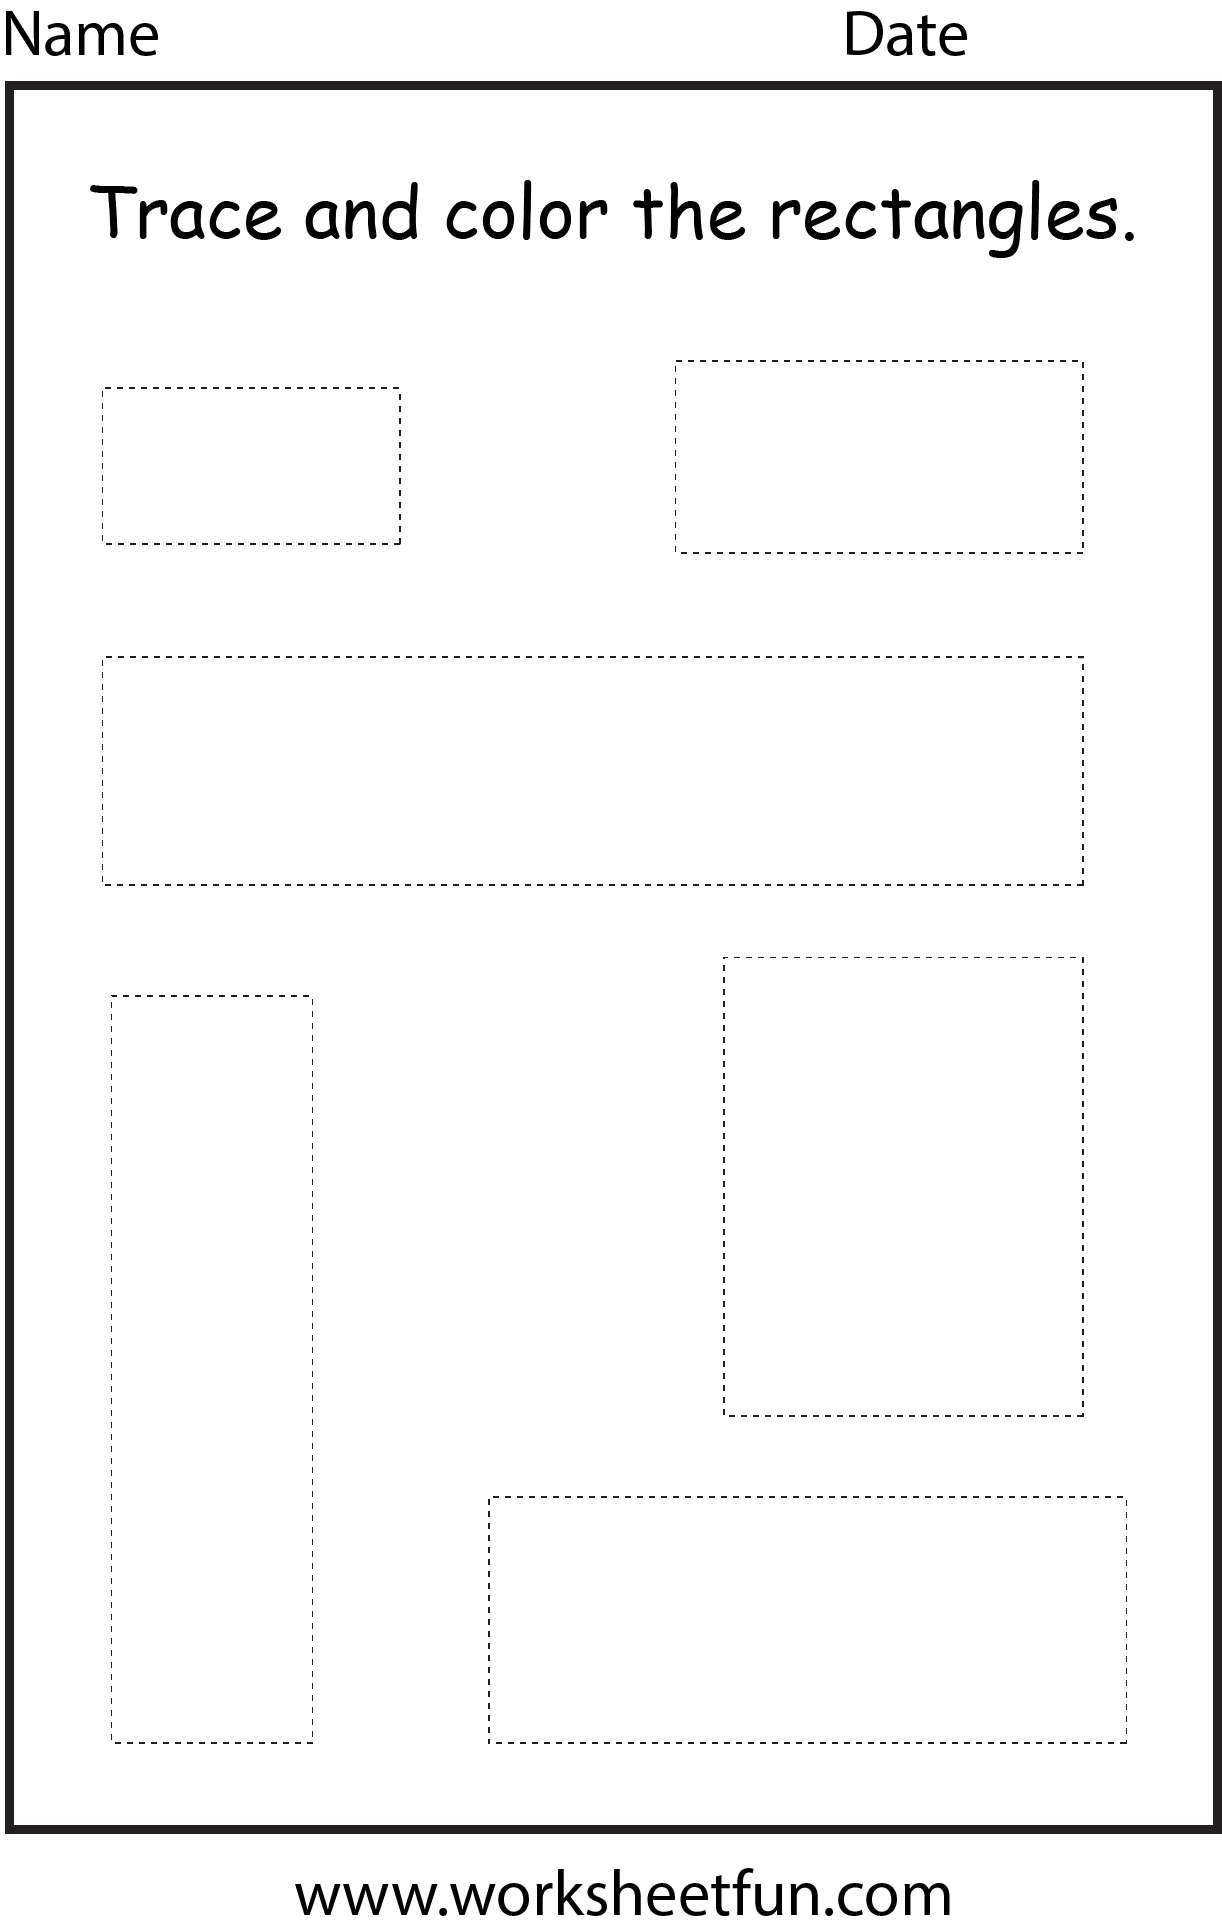 shape-tracing-rectangle-1-worksheet-free-printable-worksheets